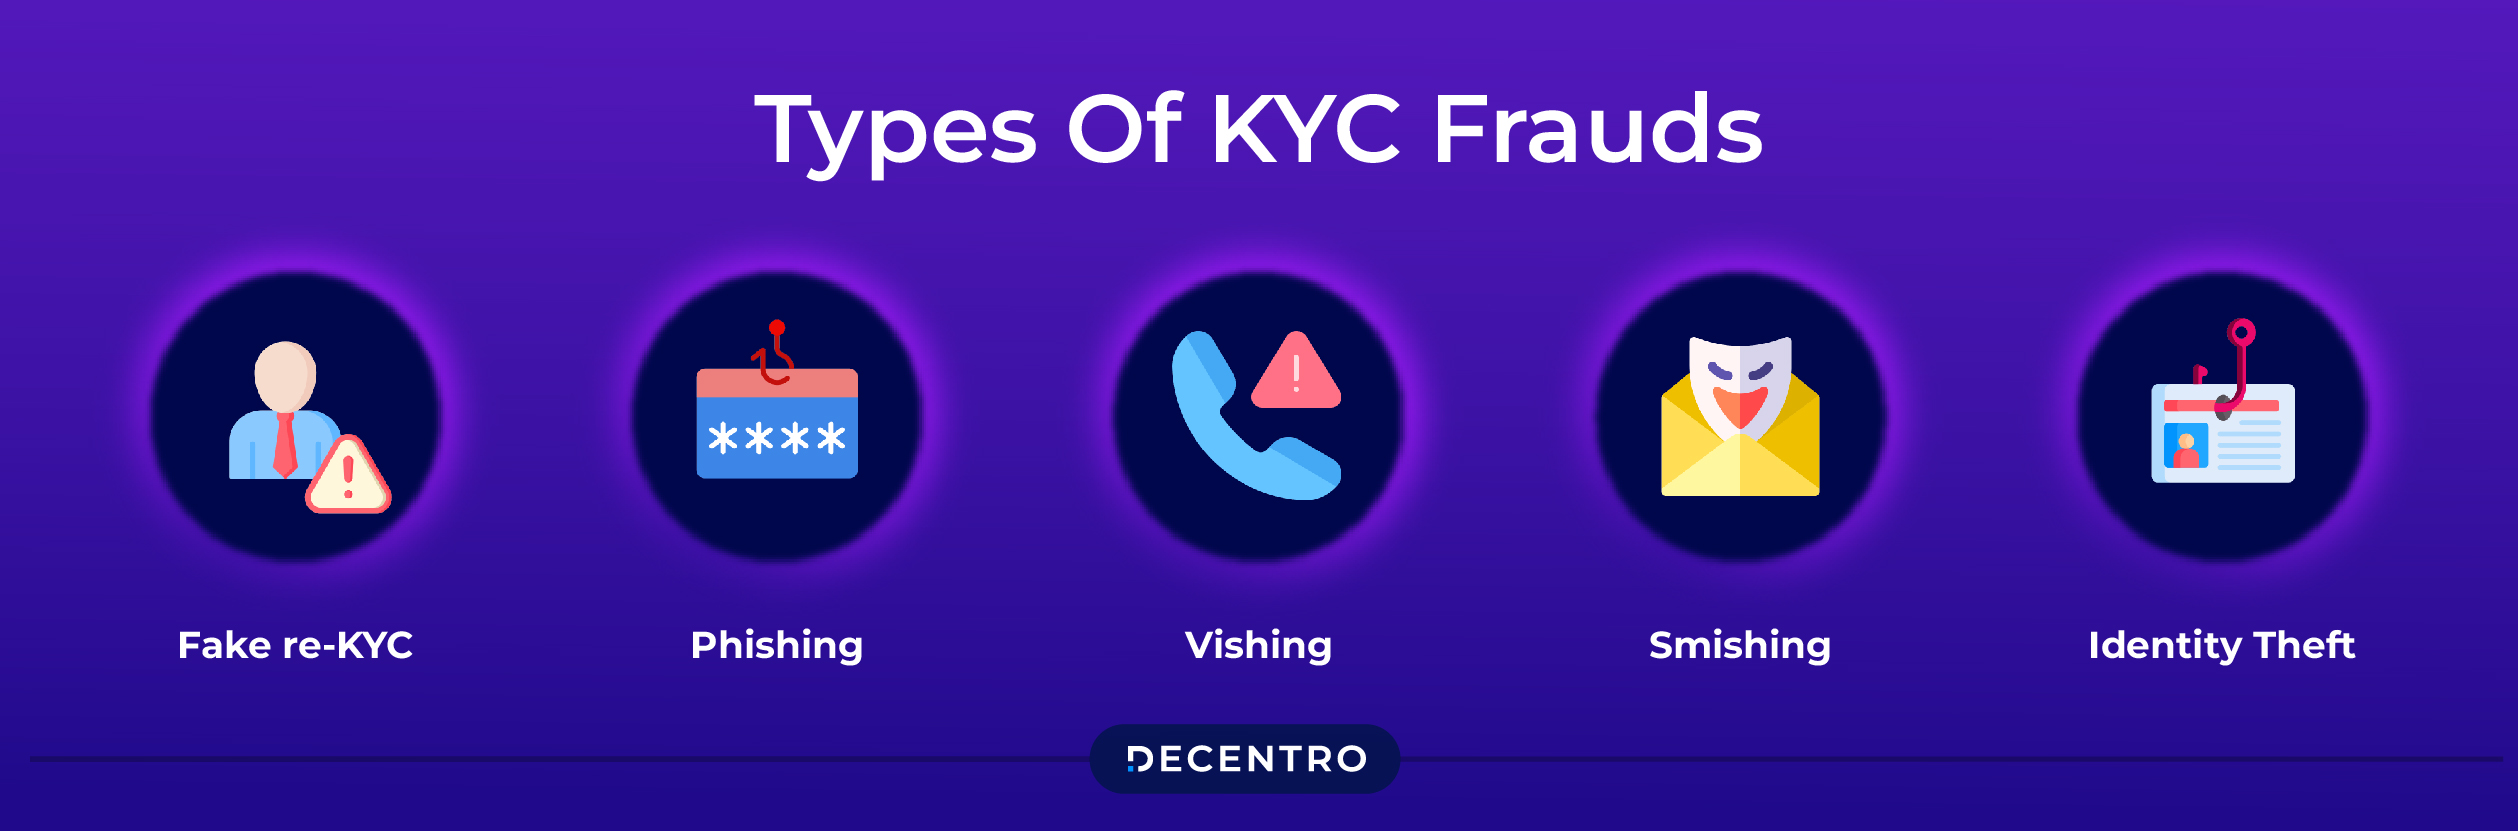 Types of KYC frauds